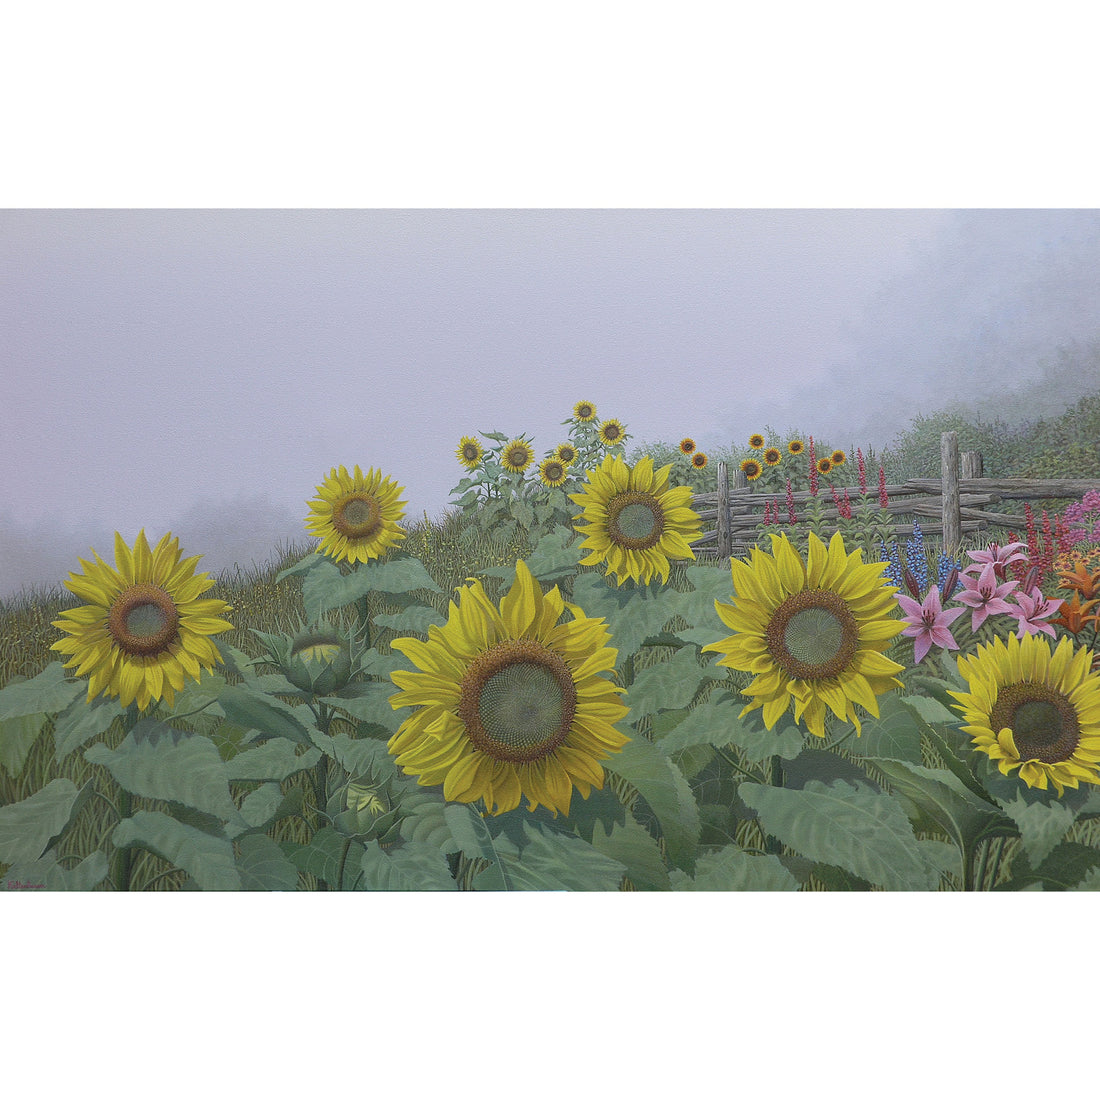 John Kaltenhauser "Sunflowers" floral painting Canadian artist